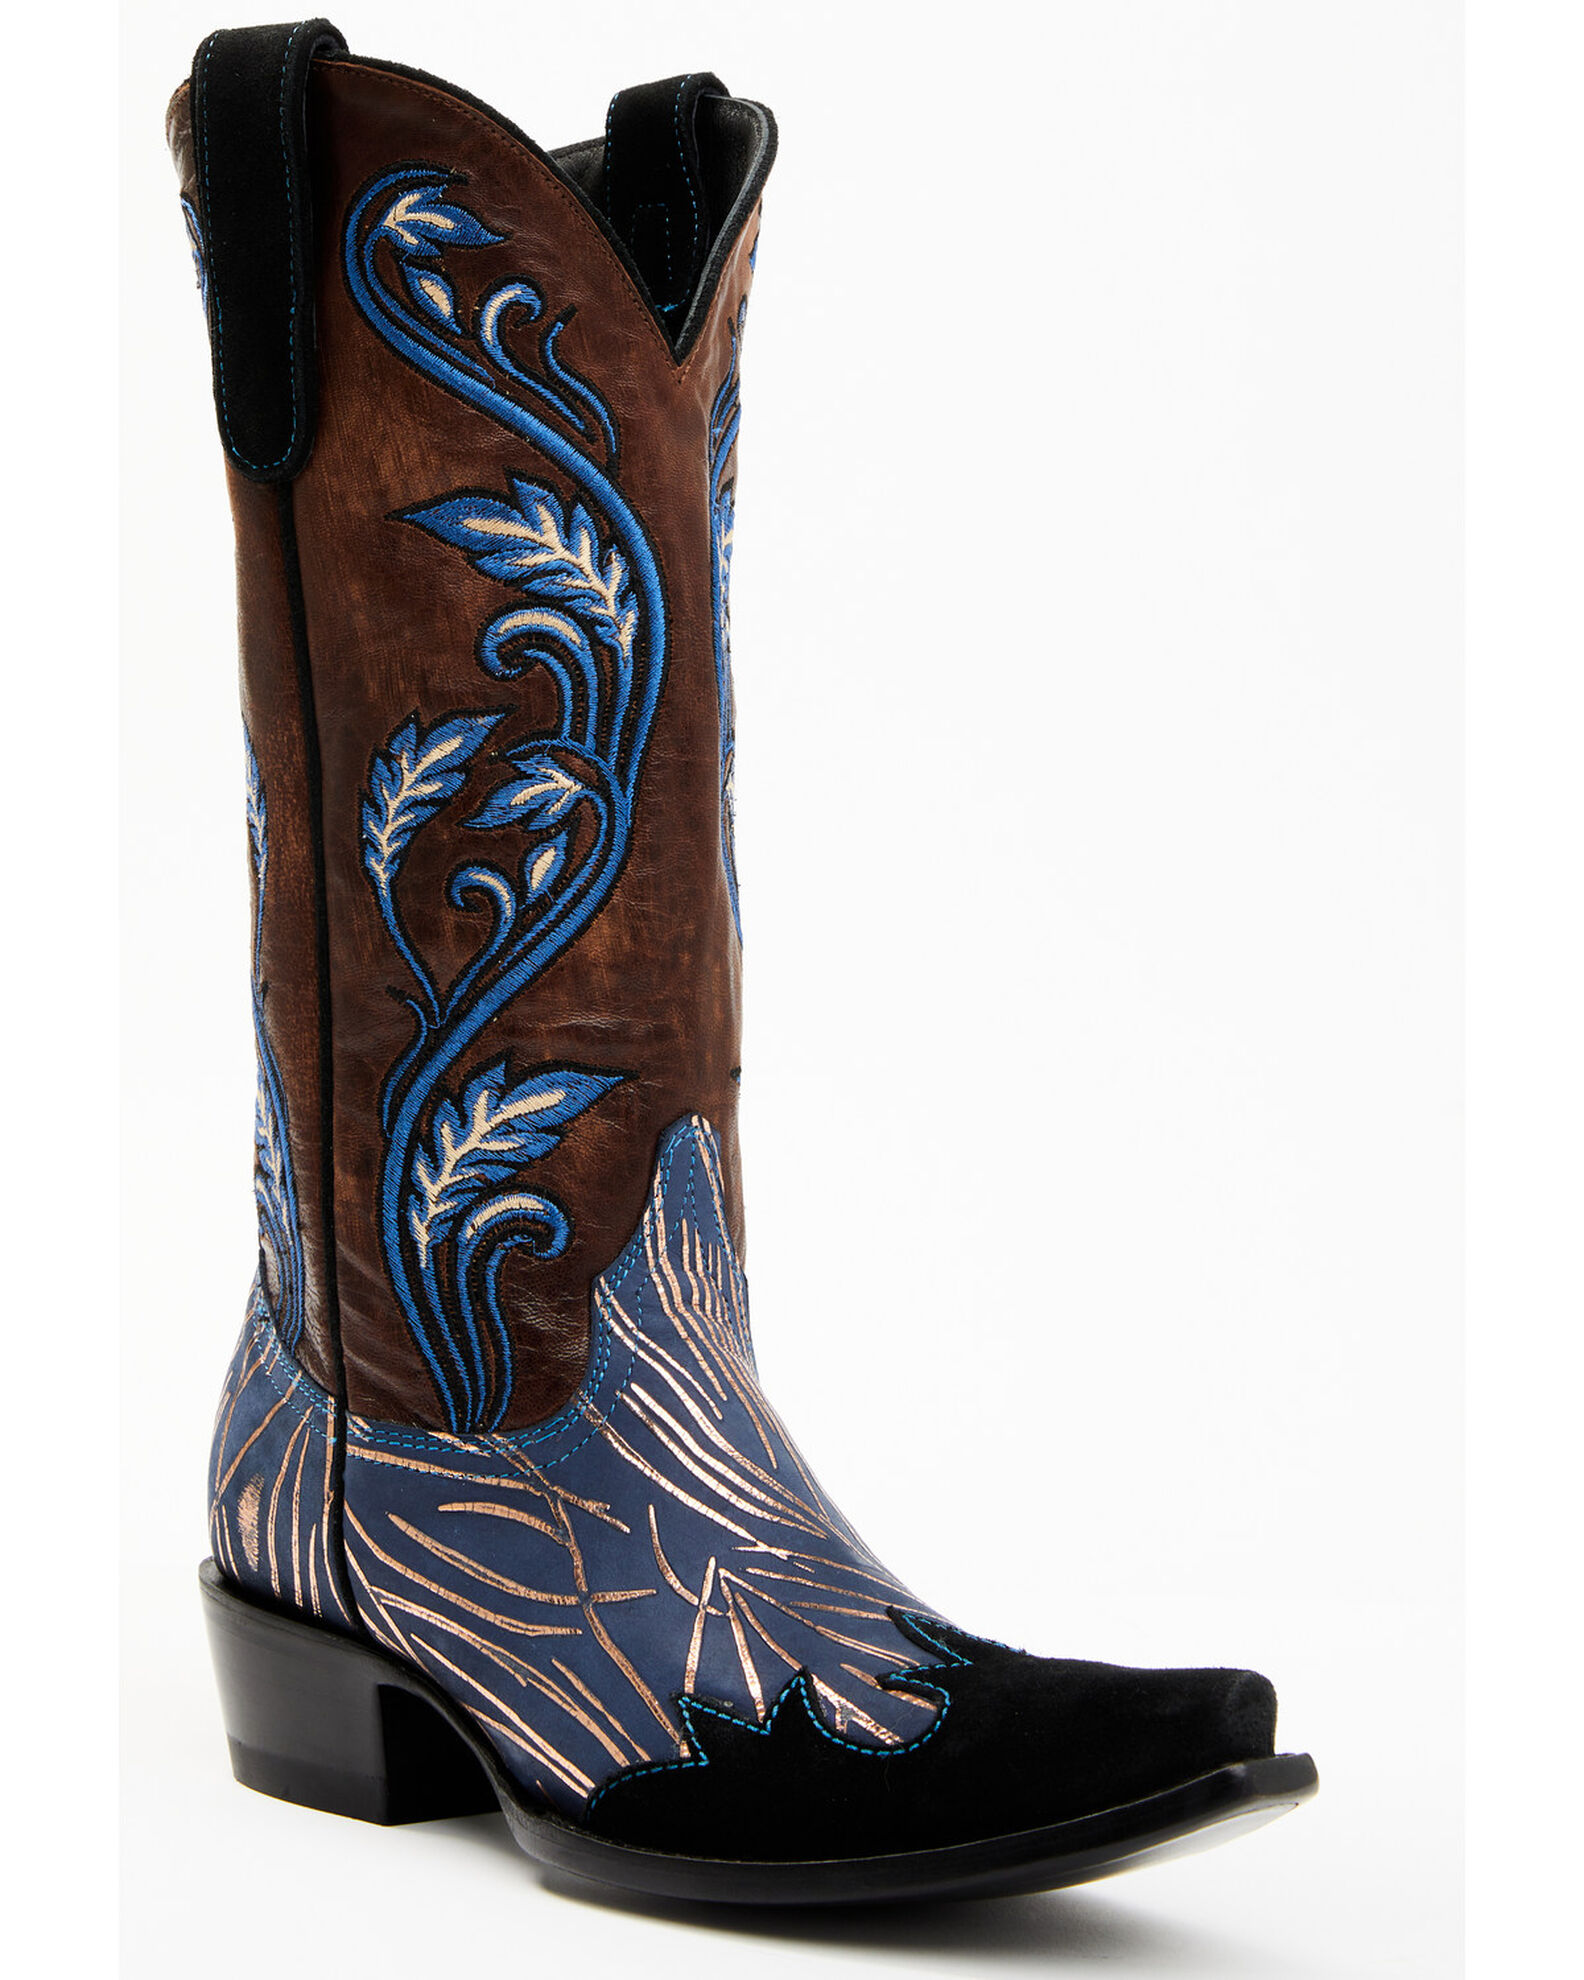 Yippee Ki Yay by Old Gringo Women's Elva Western Boots - Snip Toe